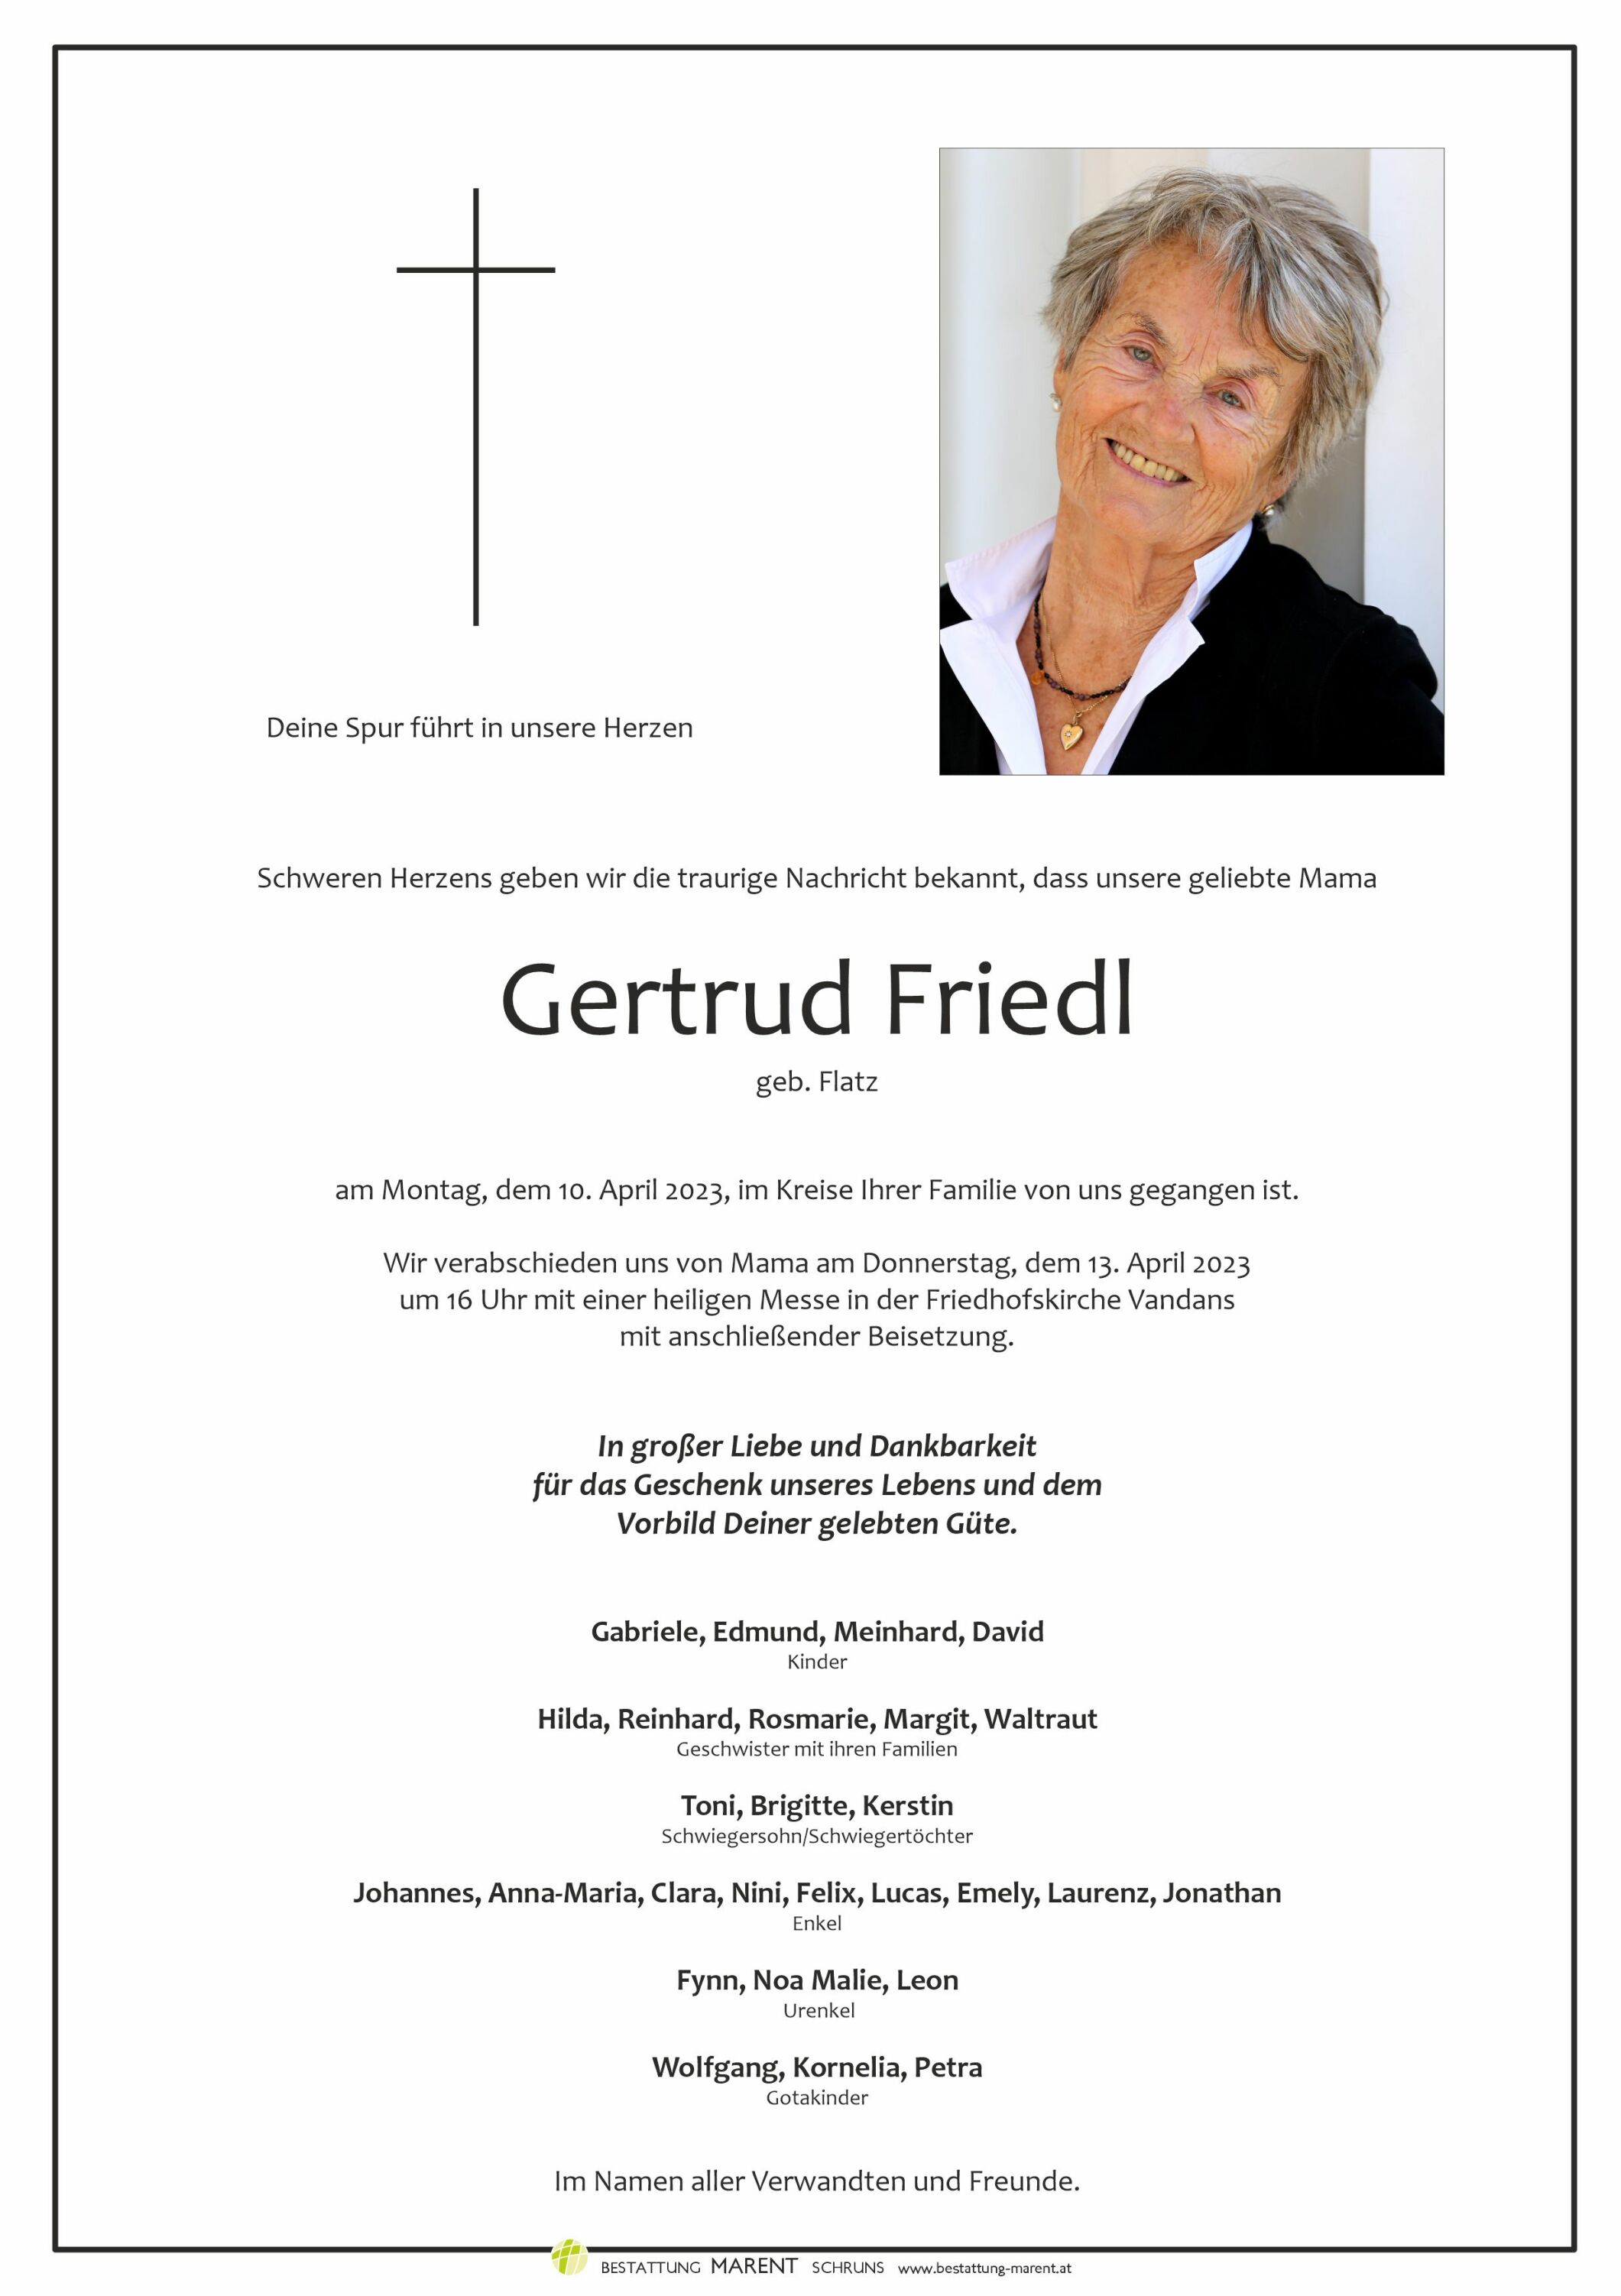 Gertrud Friedl